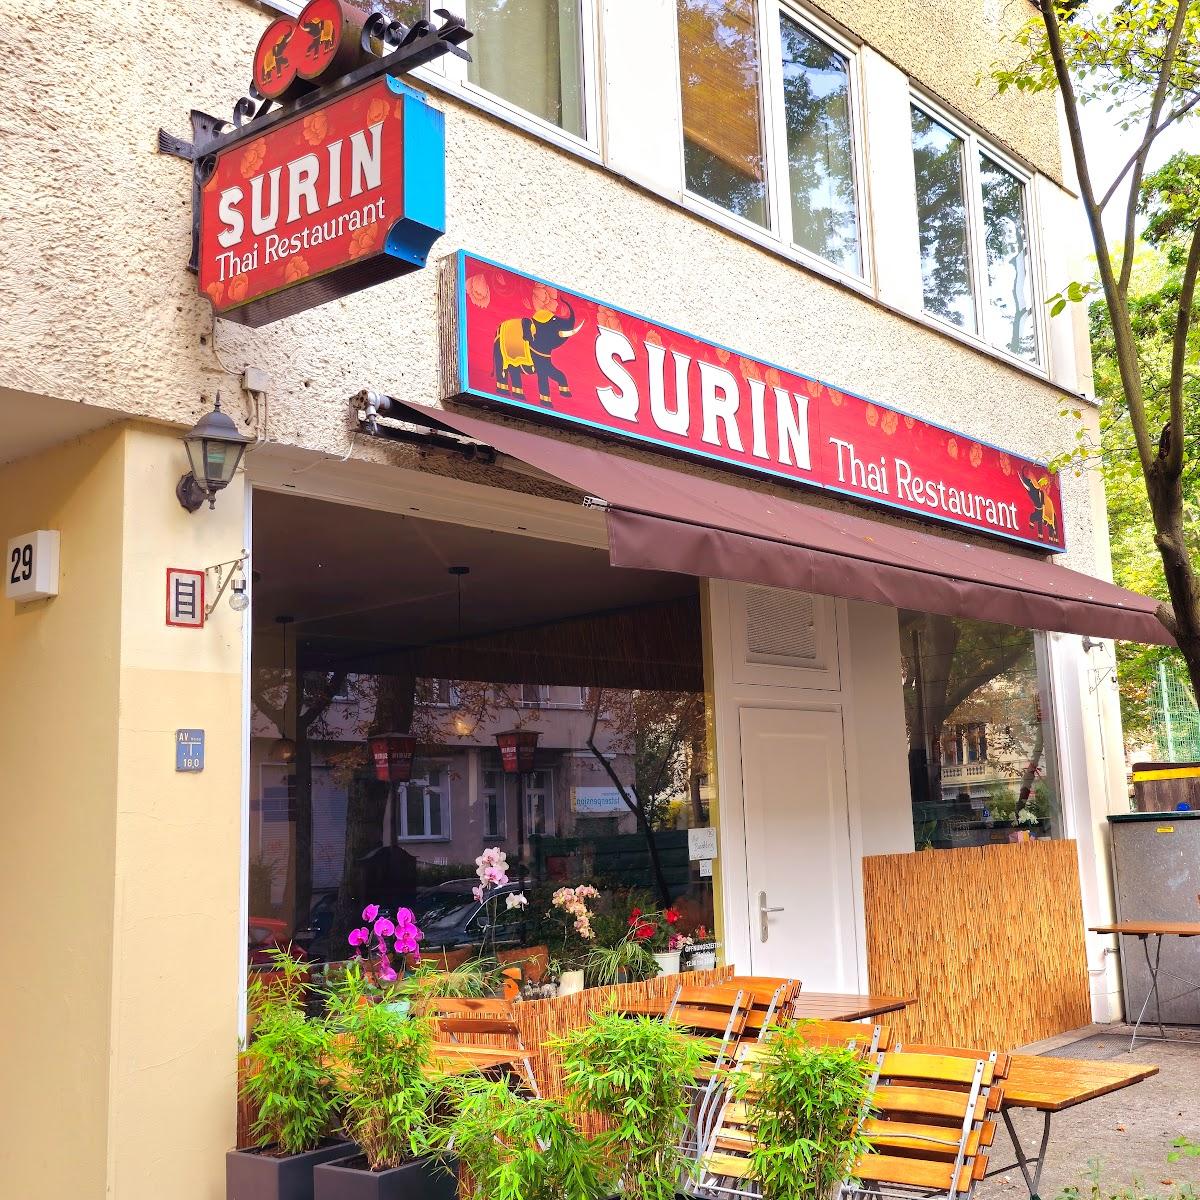 Restaurant "Surin Restaurant" in Berlin